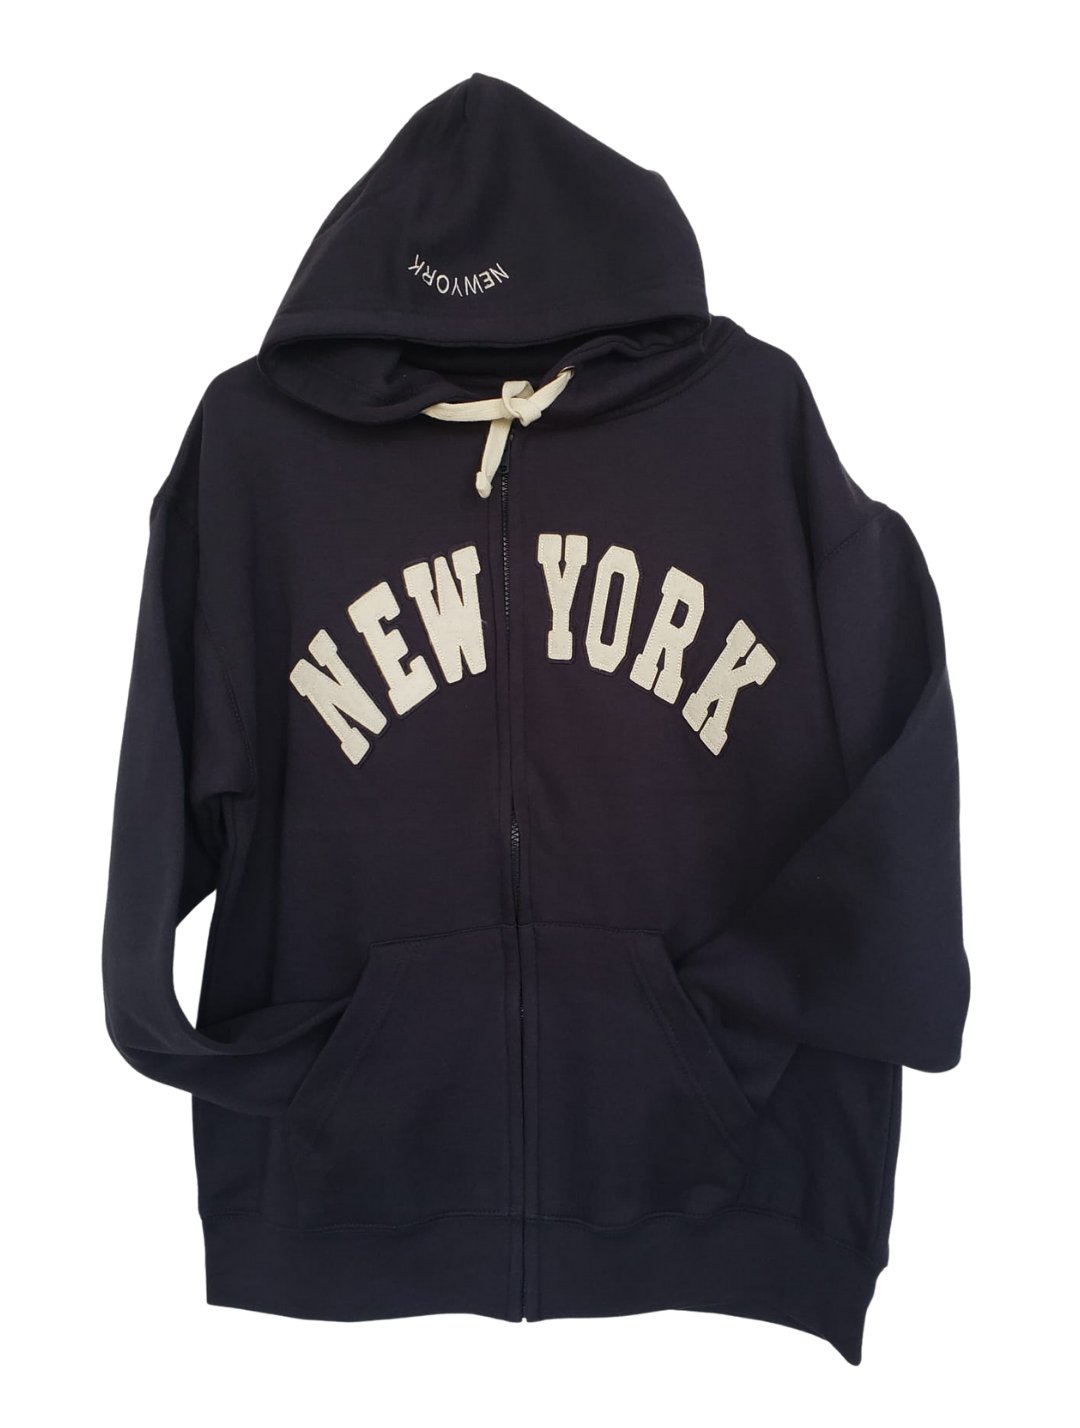 Men's New York City Zippered Hoodie Sweatshirt Black Navy Pink Retro S